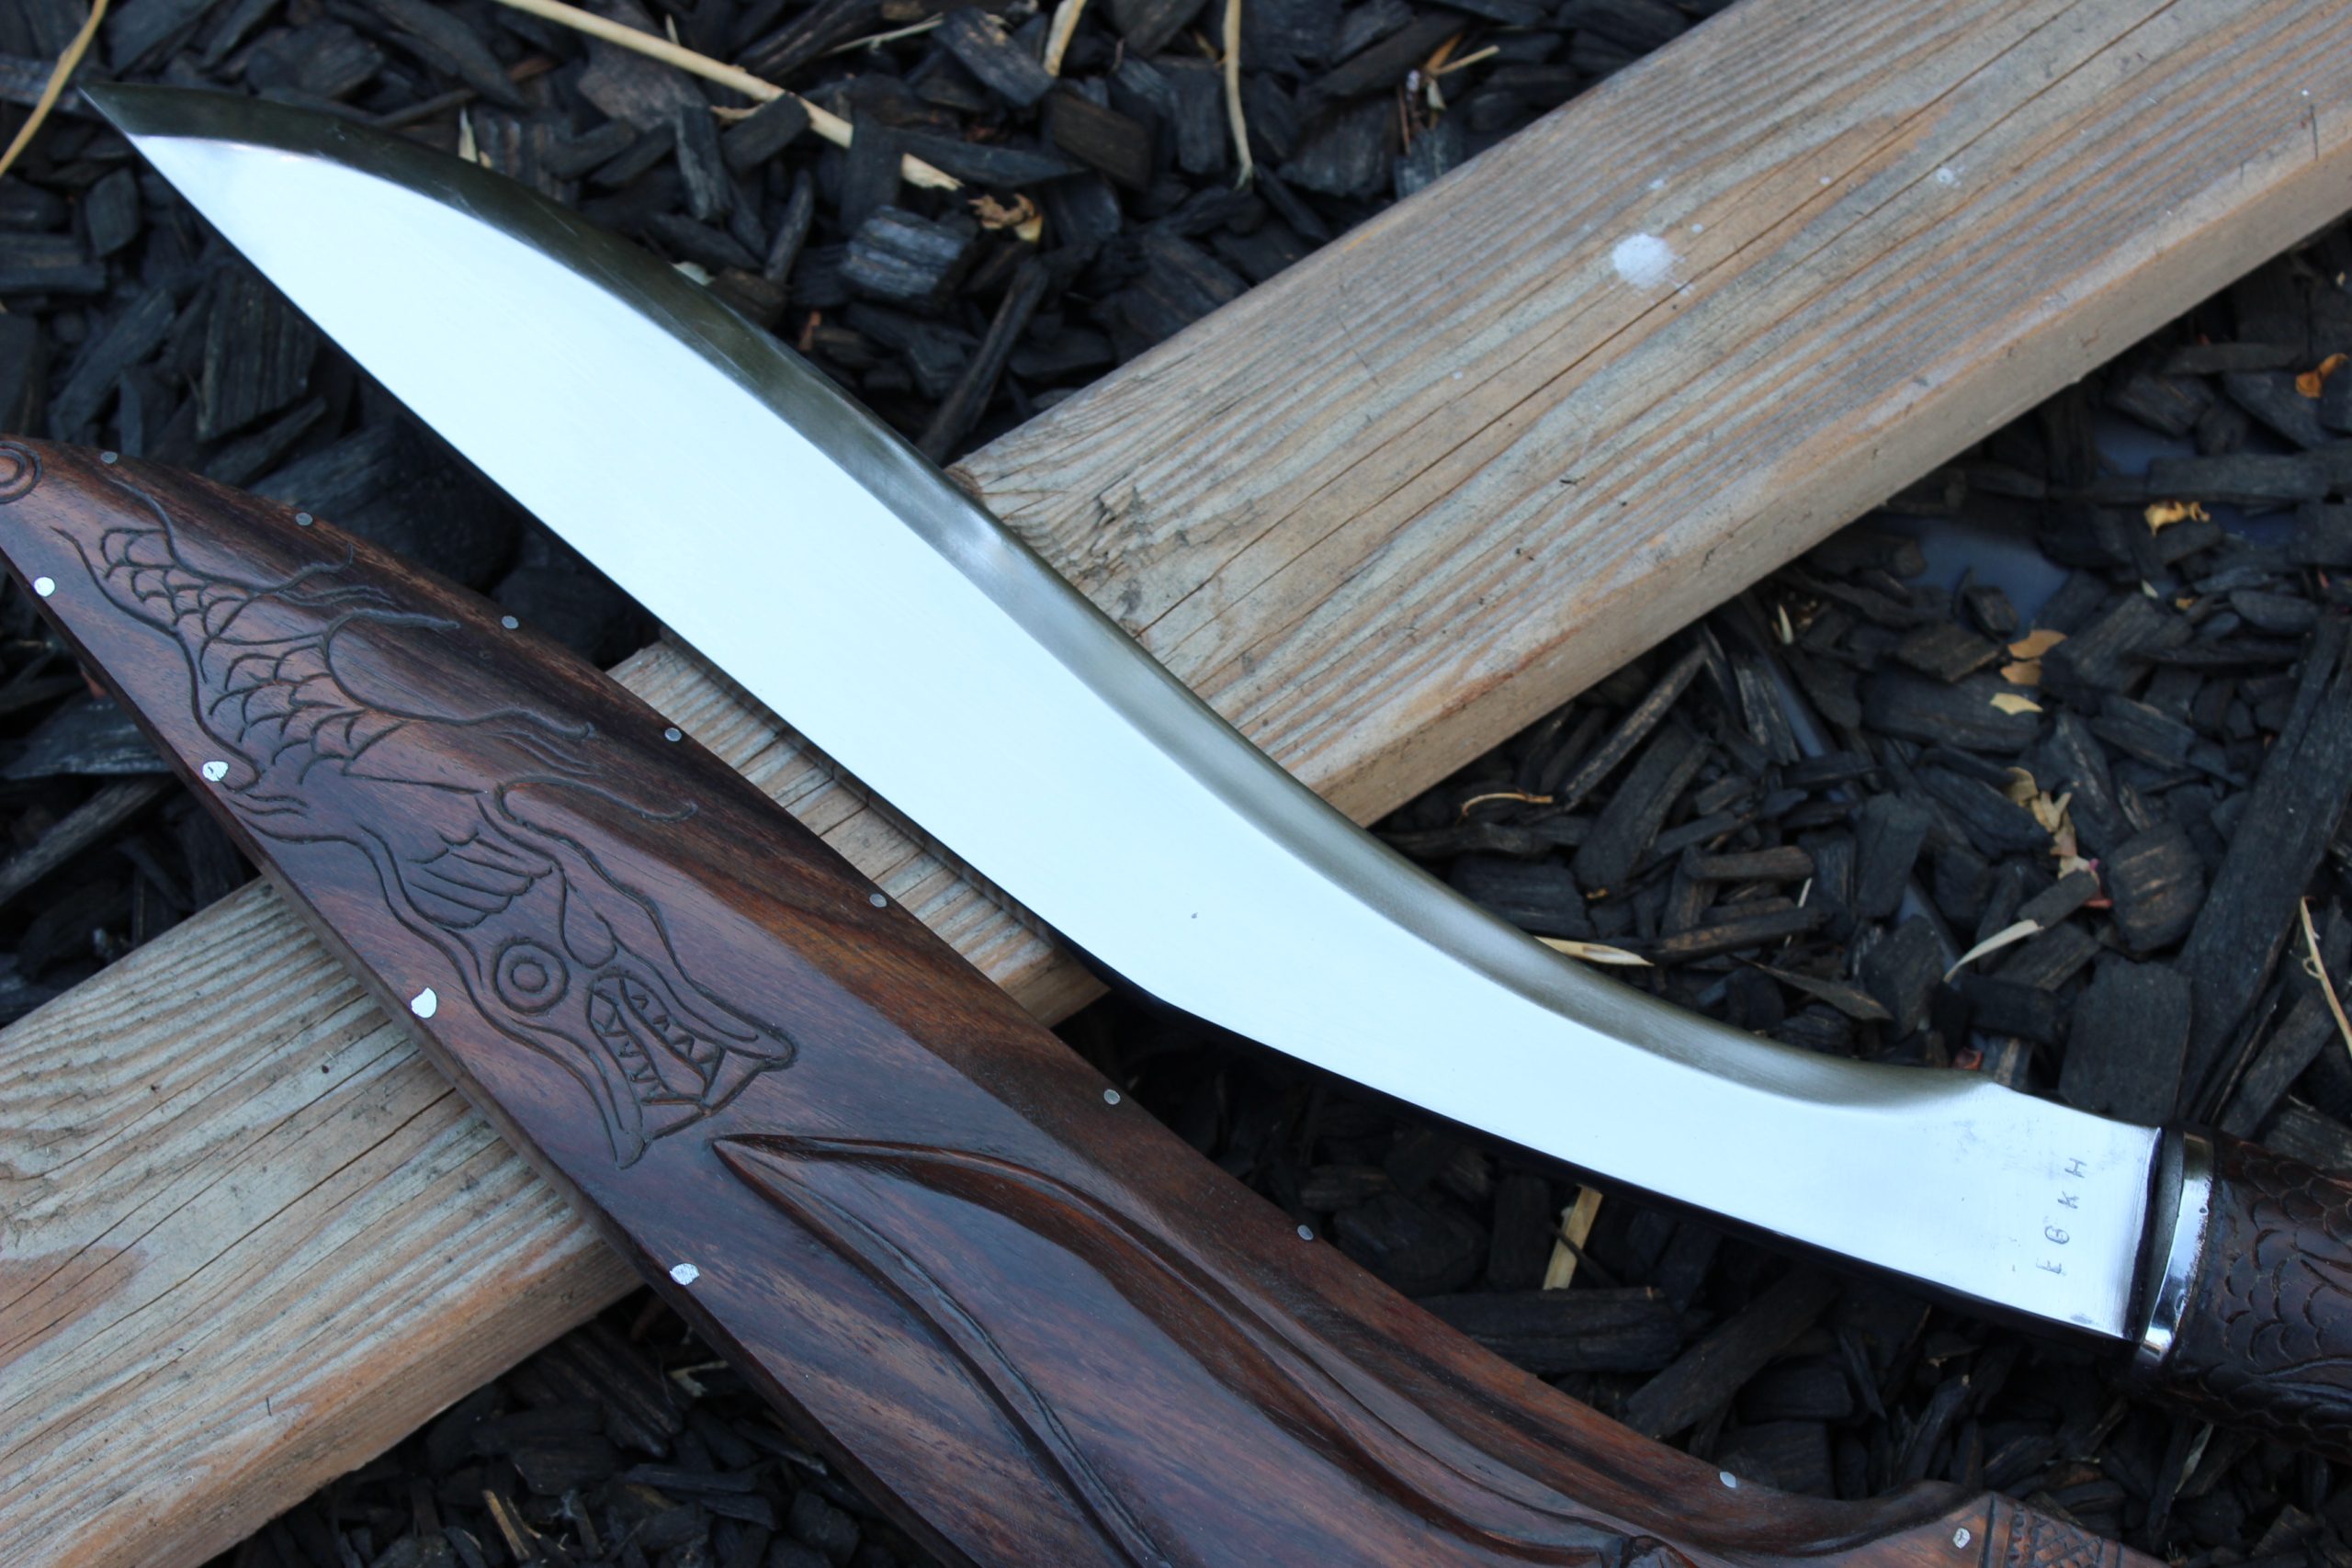 16" Blade Artistic Sheath Dragon Handle Khukuri -9677